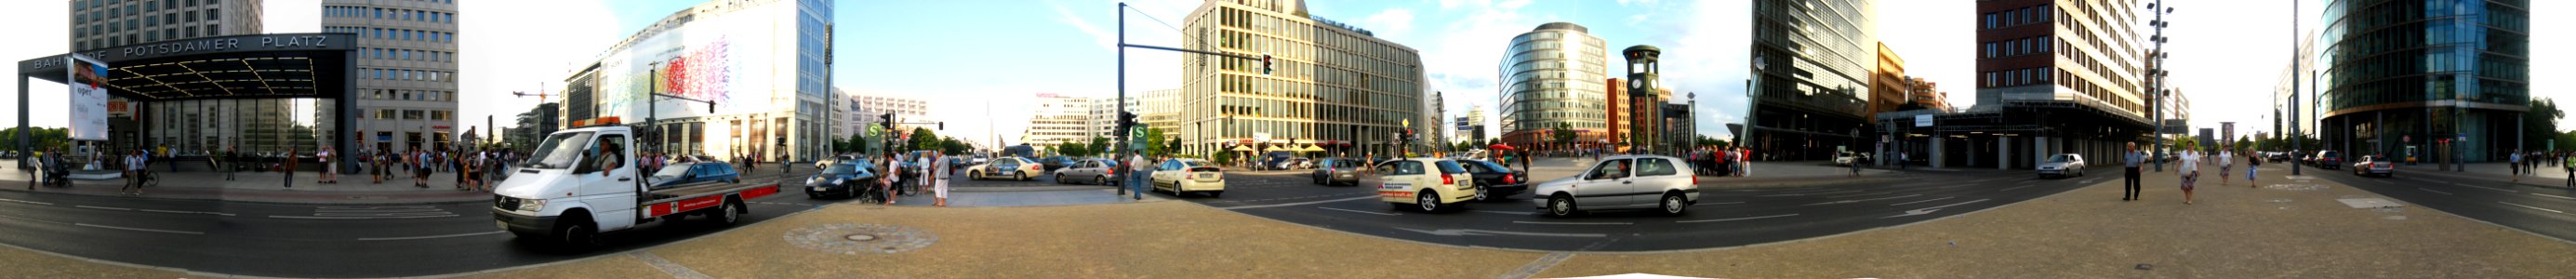 Panorama Potsdamer Platz, Berlin photo